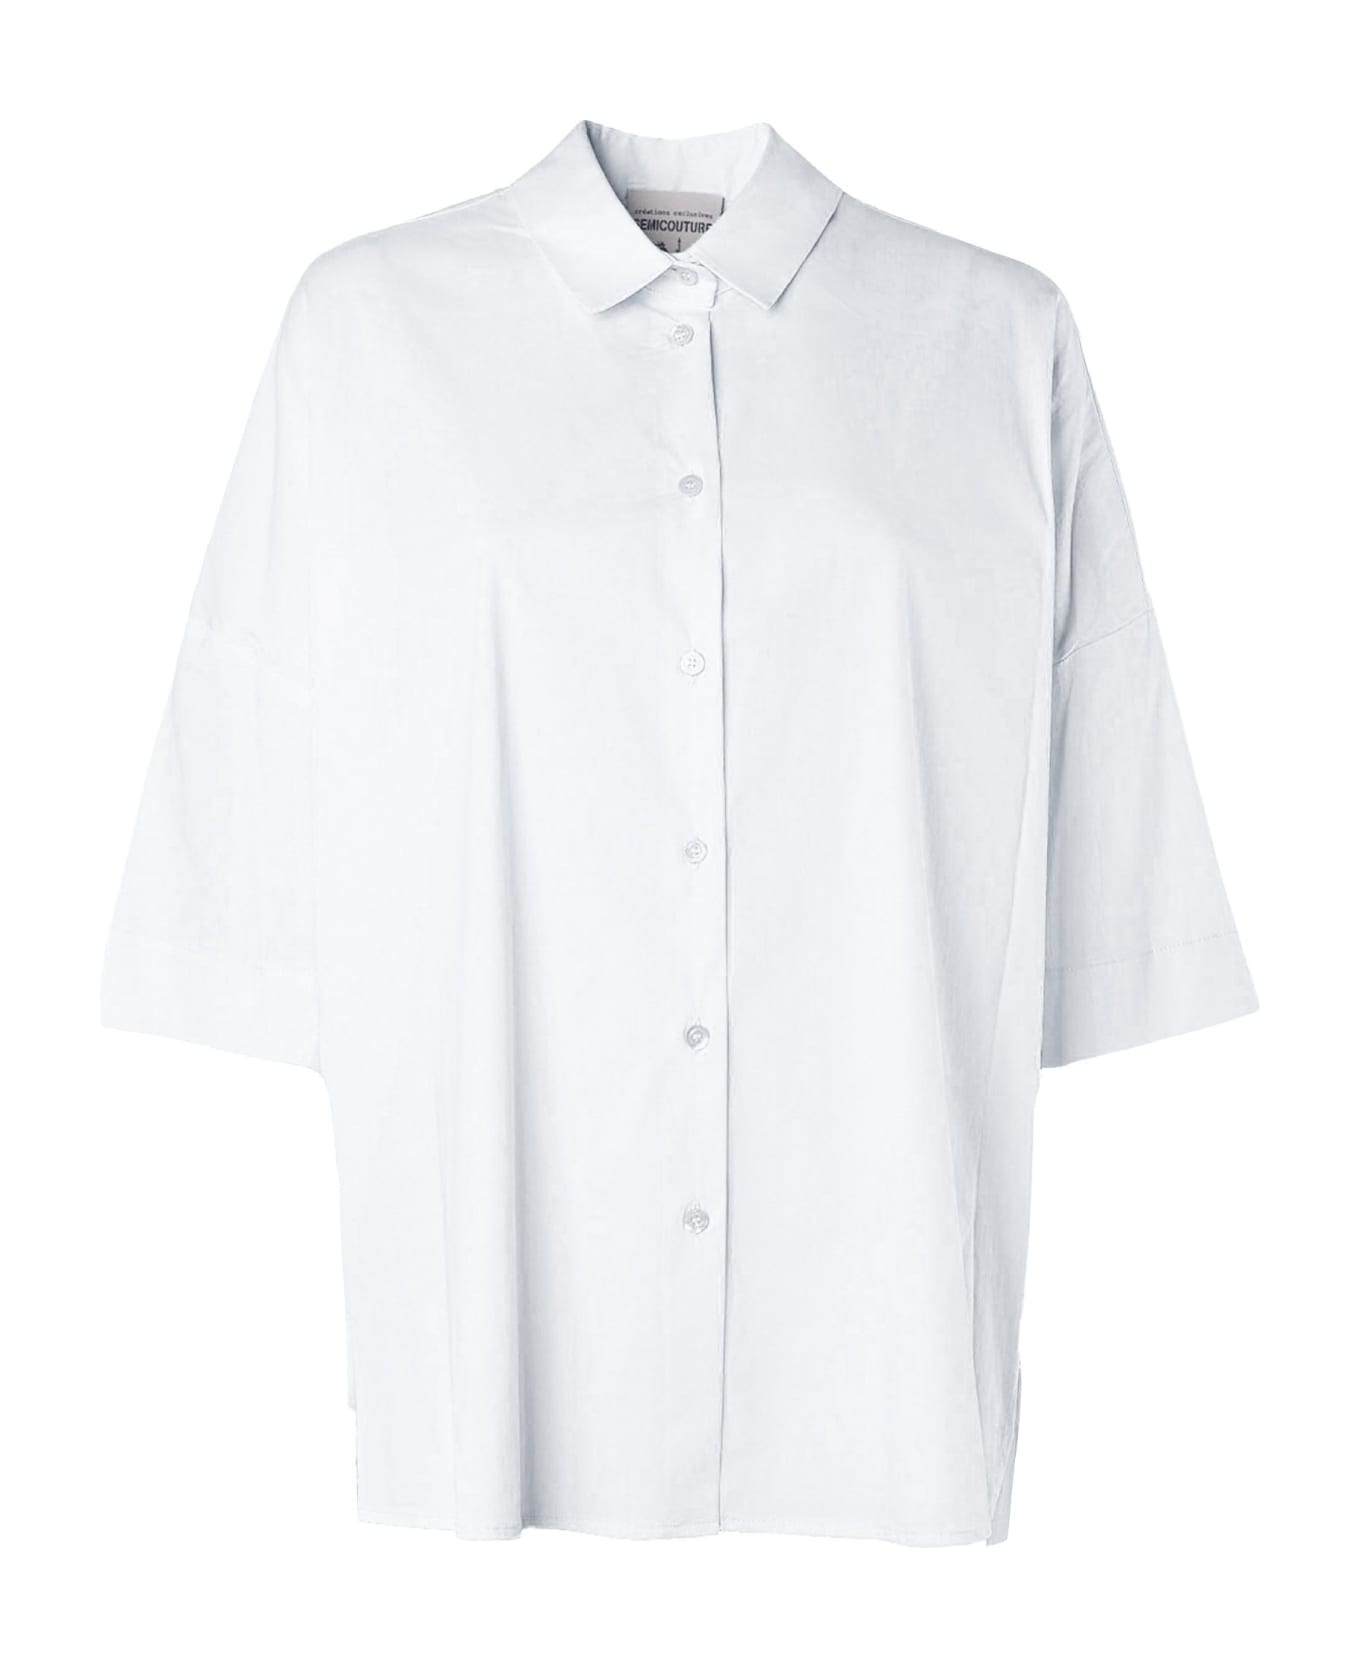 SEMICOUTURE White Cotton Blend Shirt - White